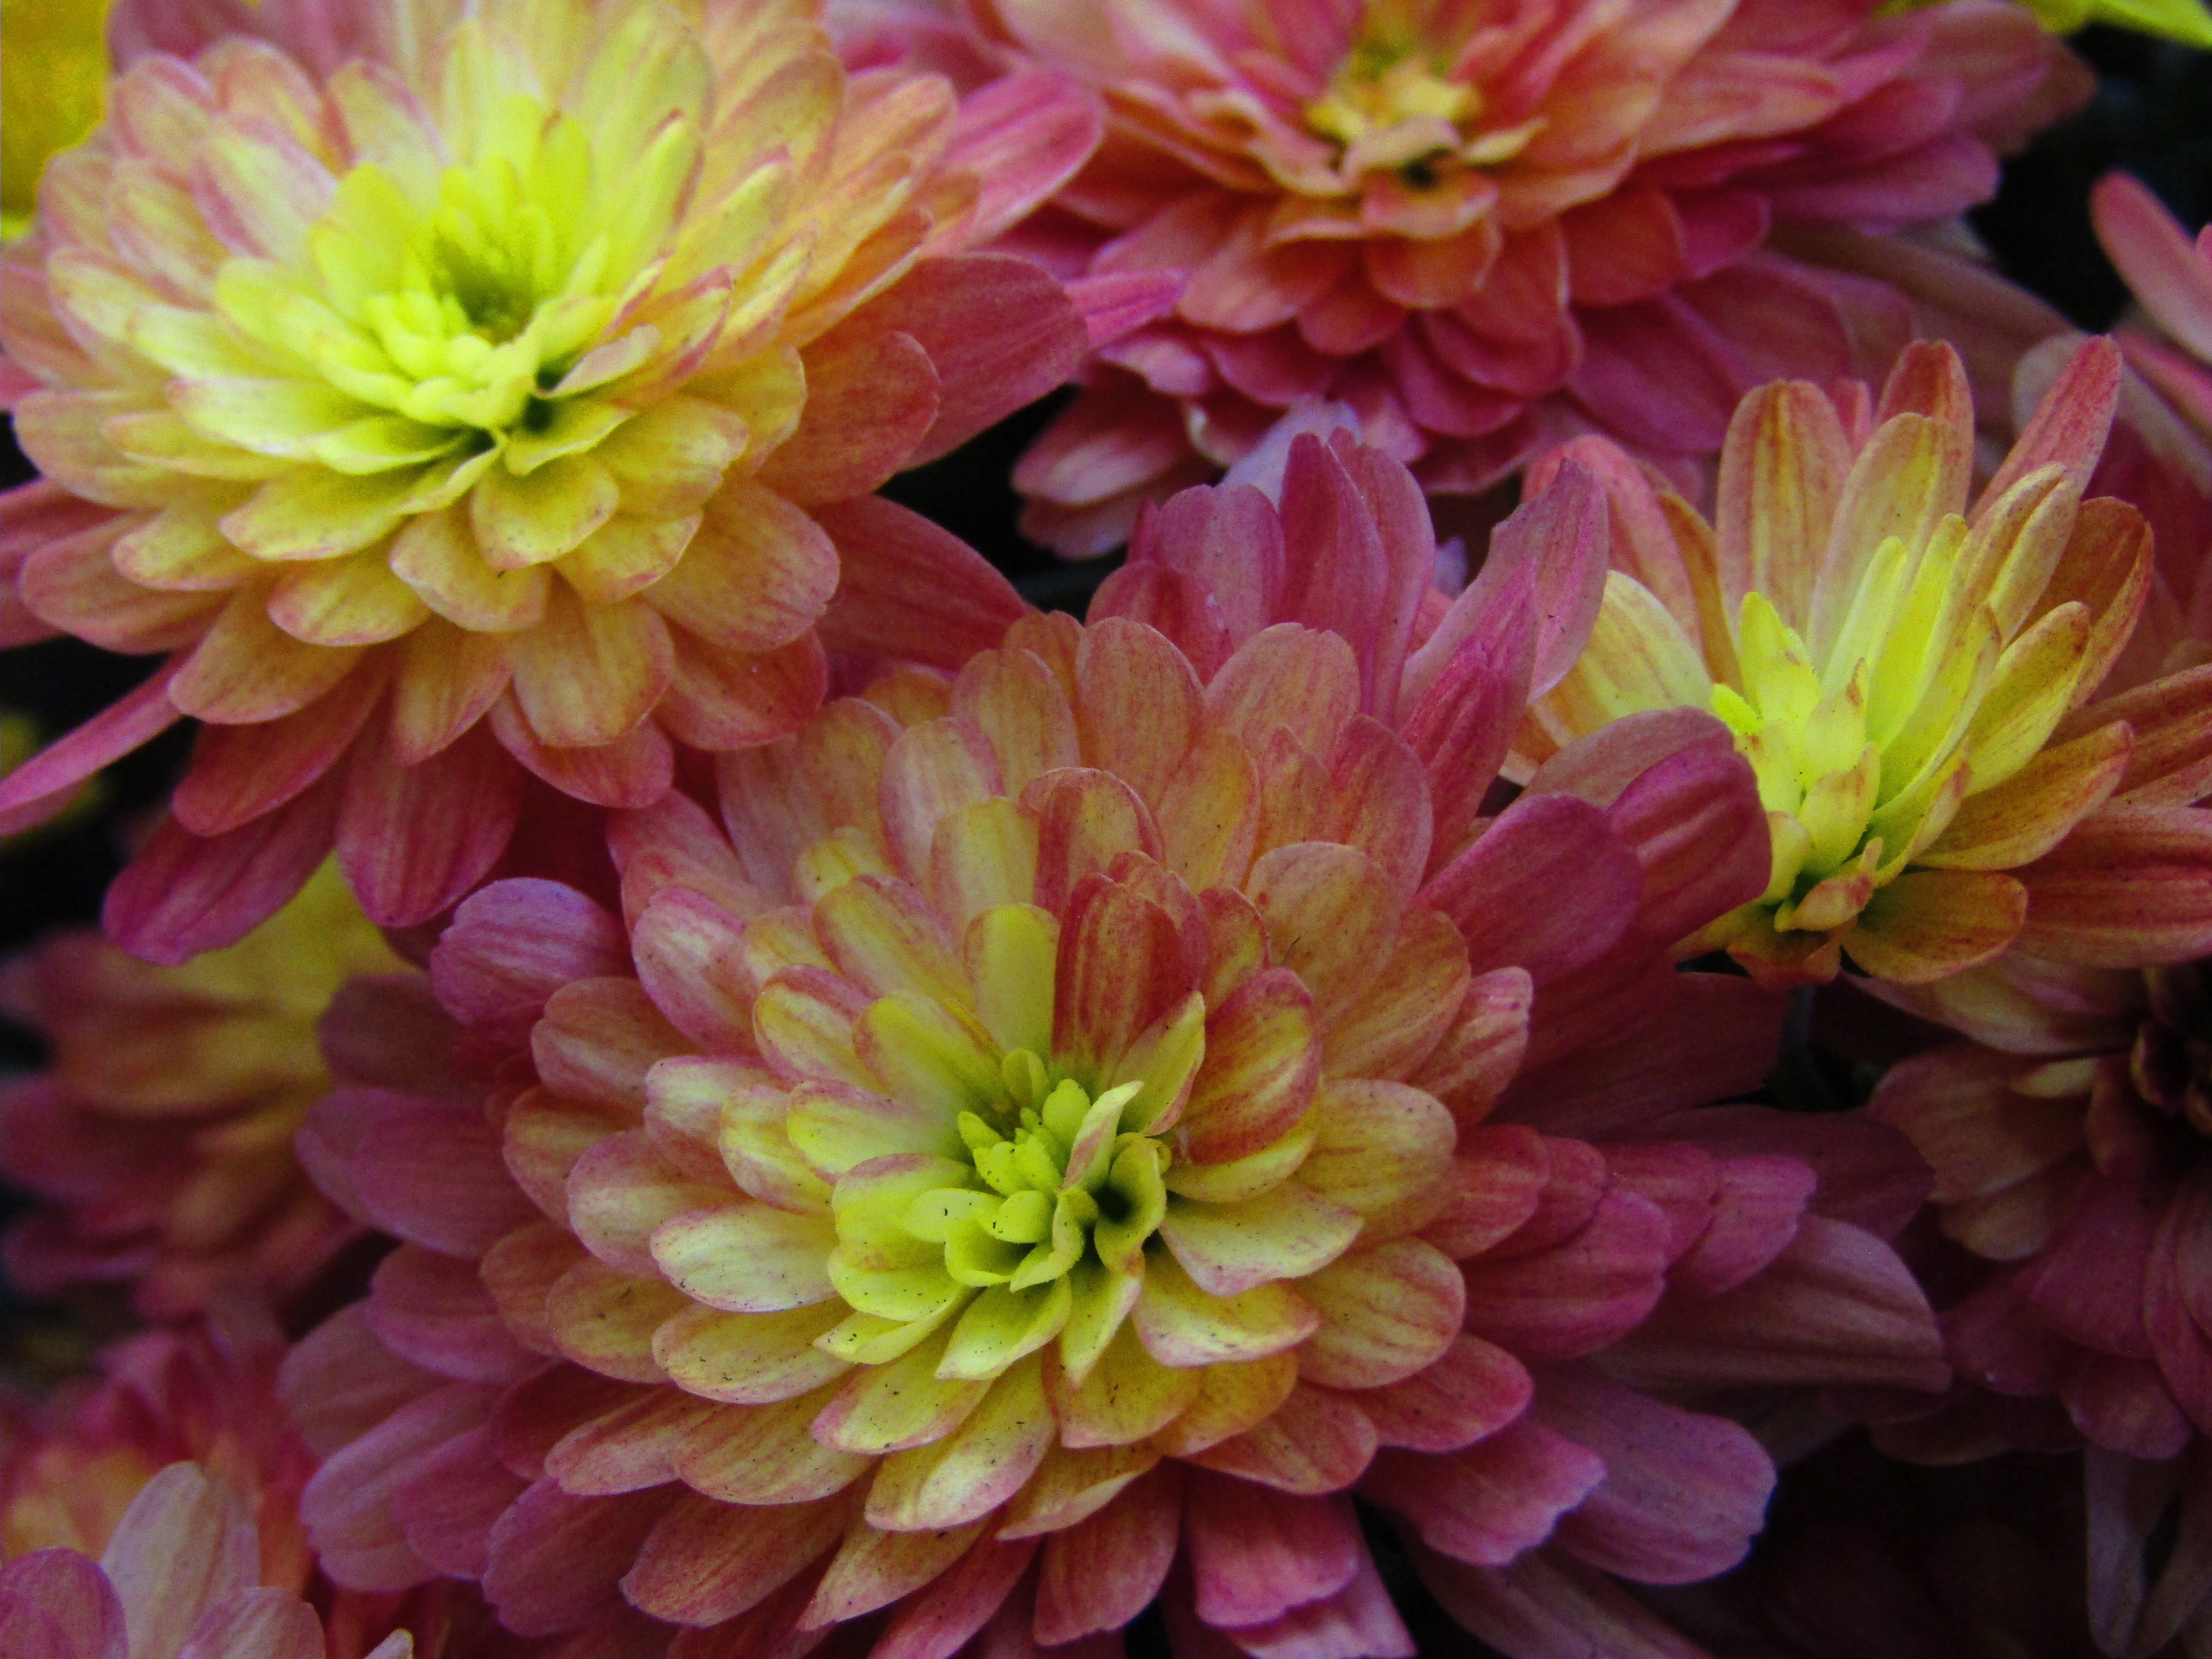 Variegated Chrysanthemums by Demasc1